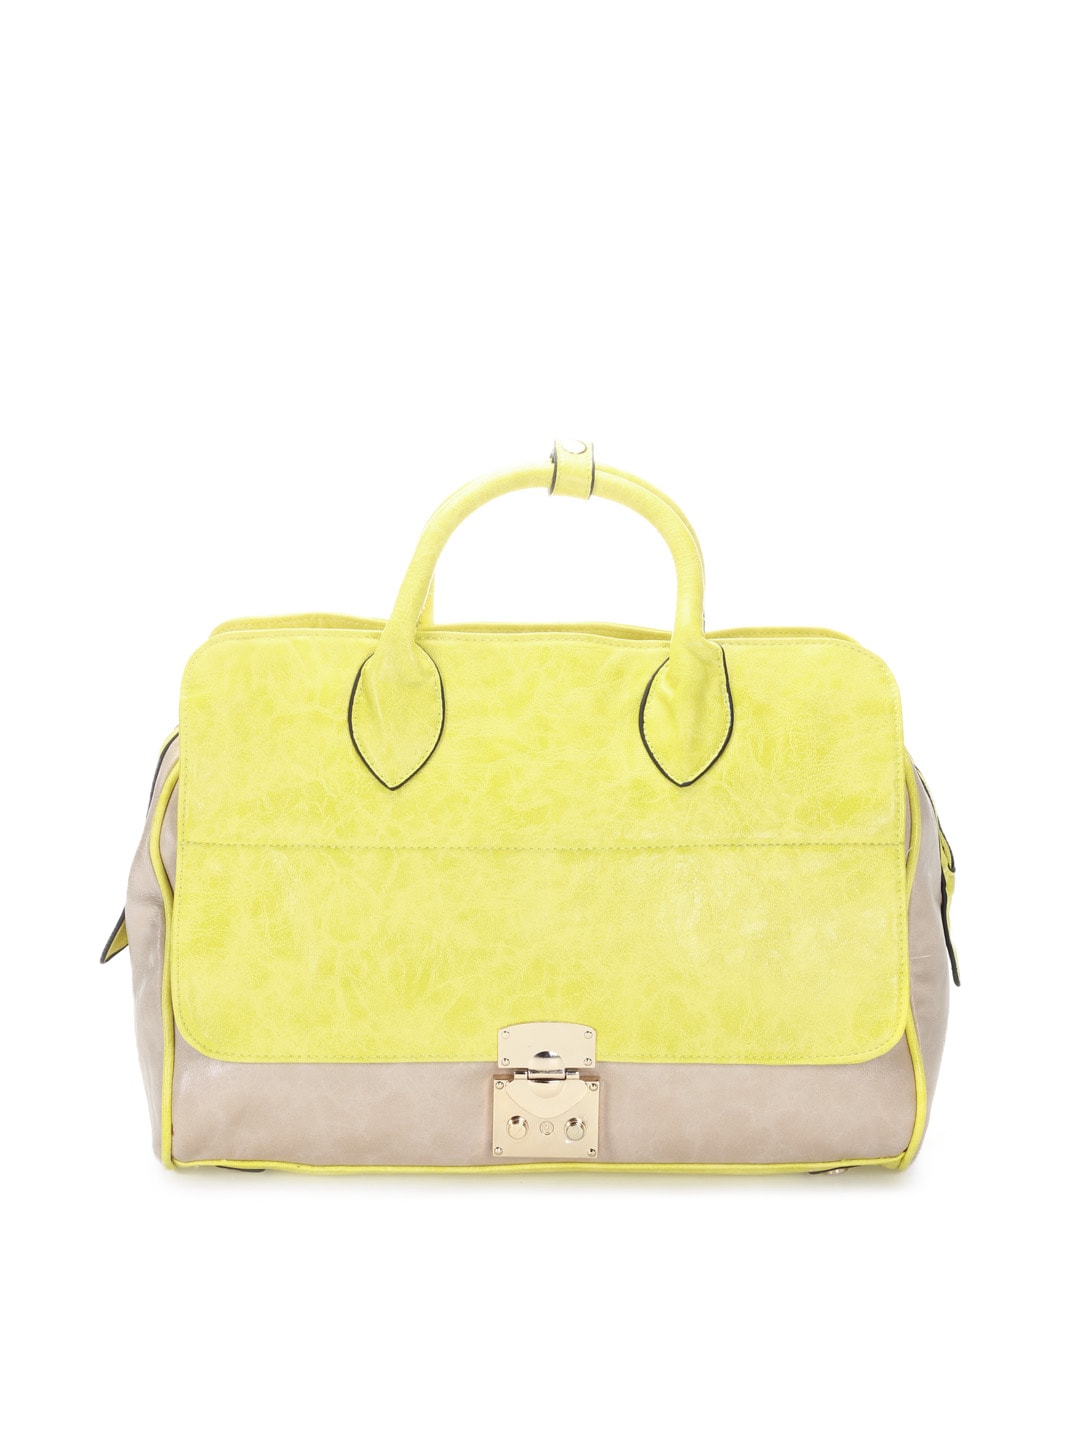 Kiara Women Beige & Yellow Handbags